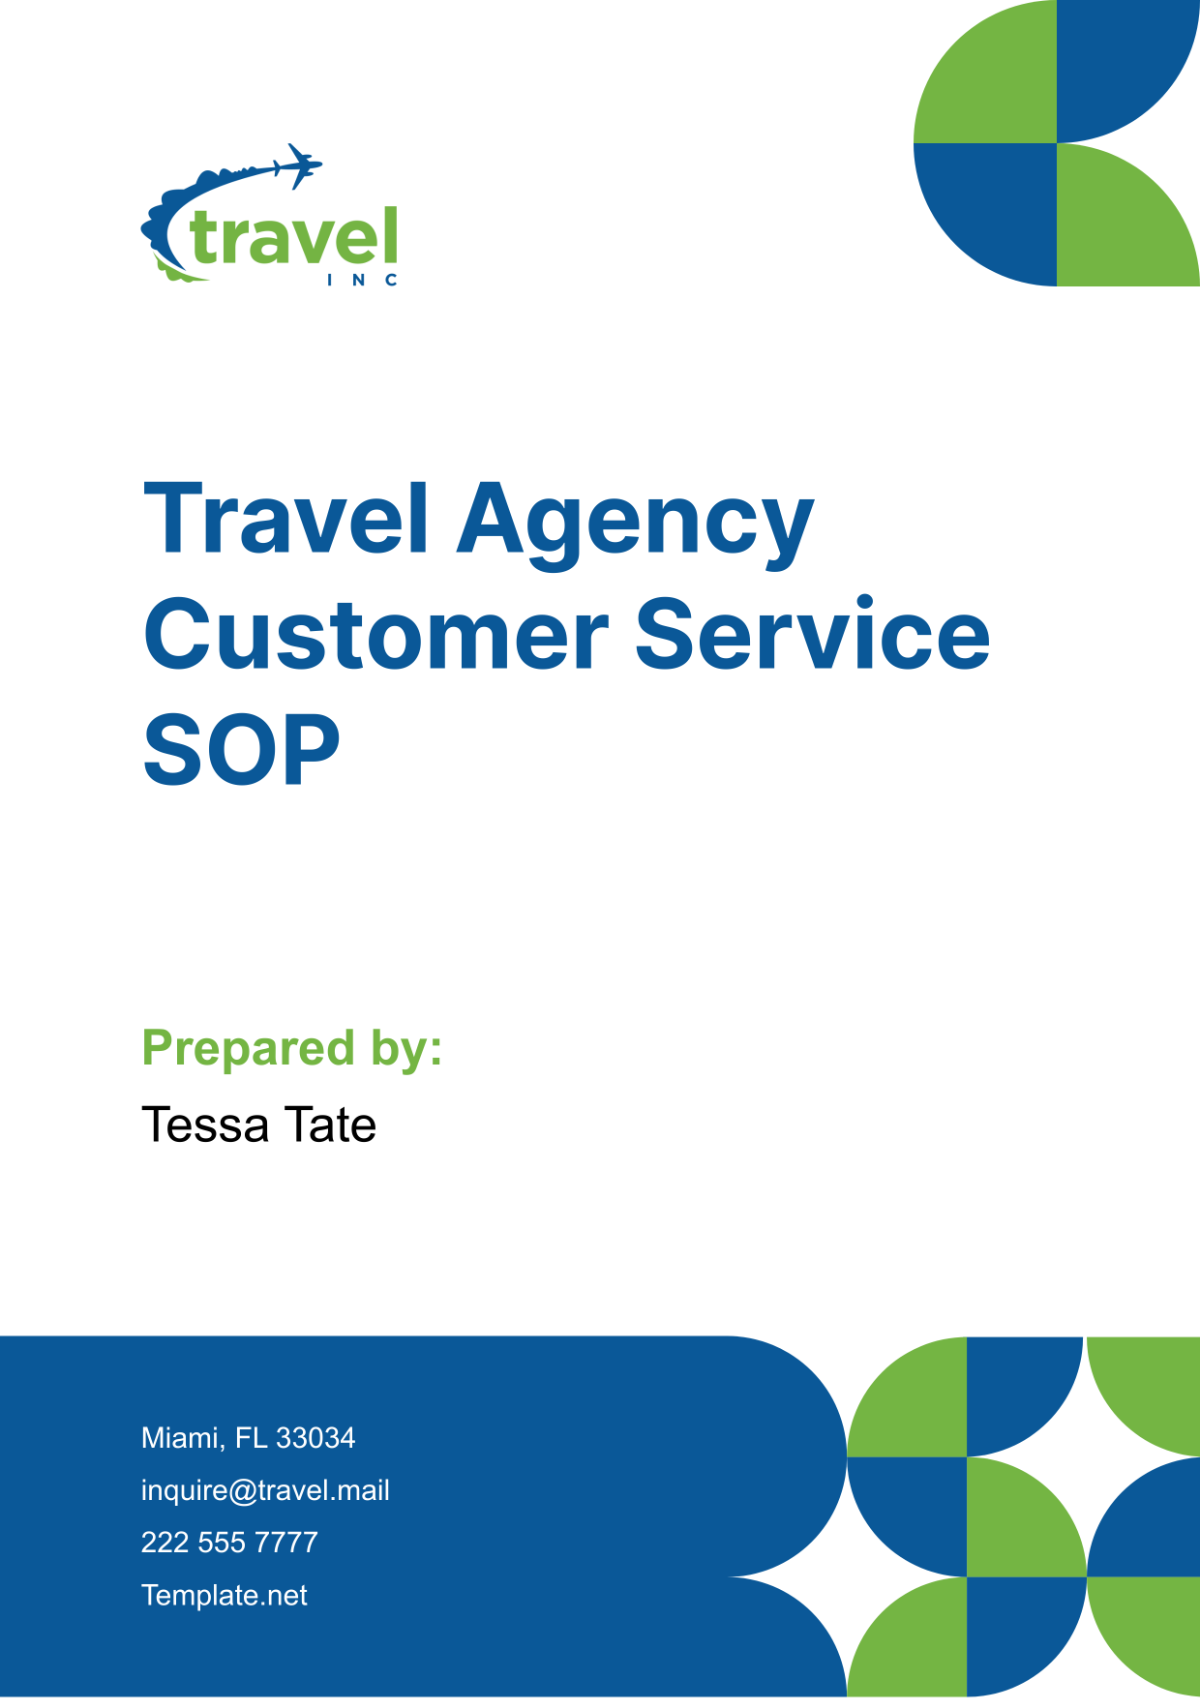 Travel Agency Customer Service SOP Template